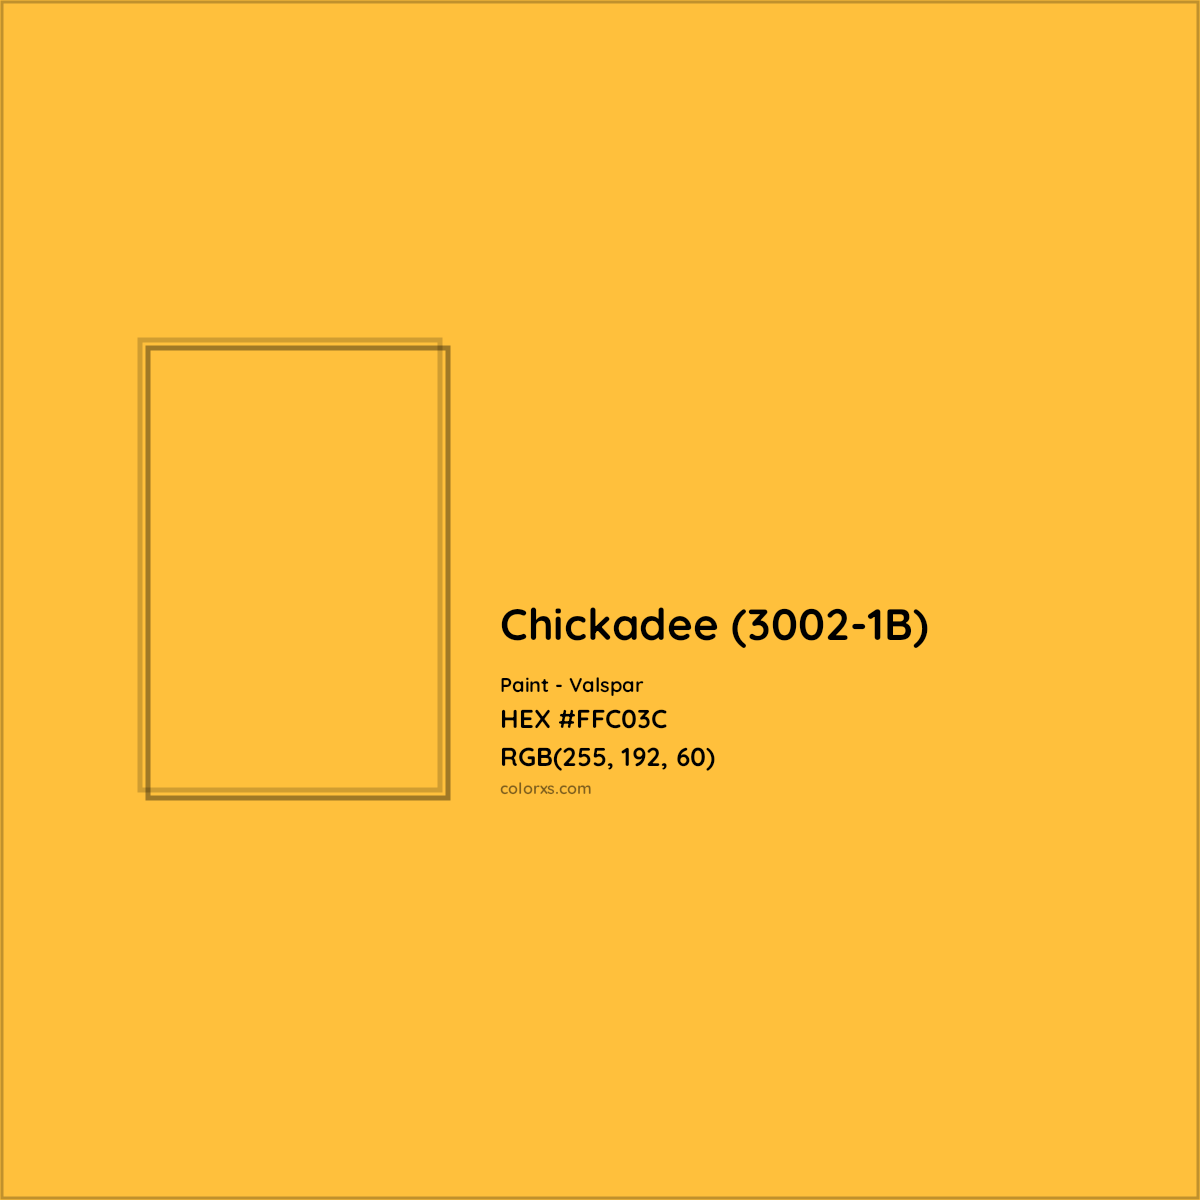 HEX #FFC03C Chickadee (3002-1B) Paint Valspar - Color Code